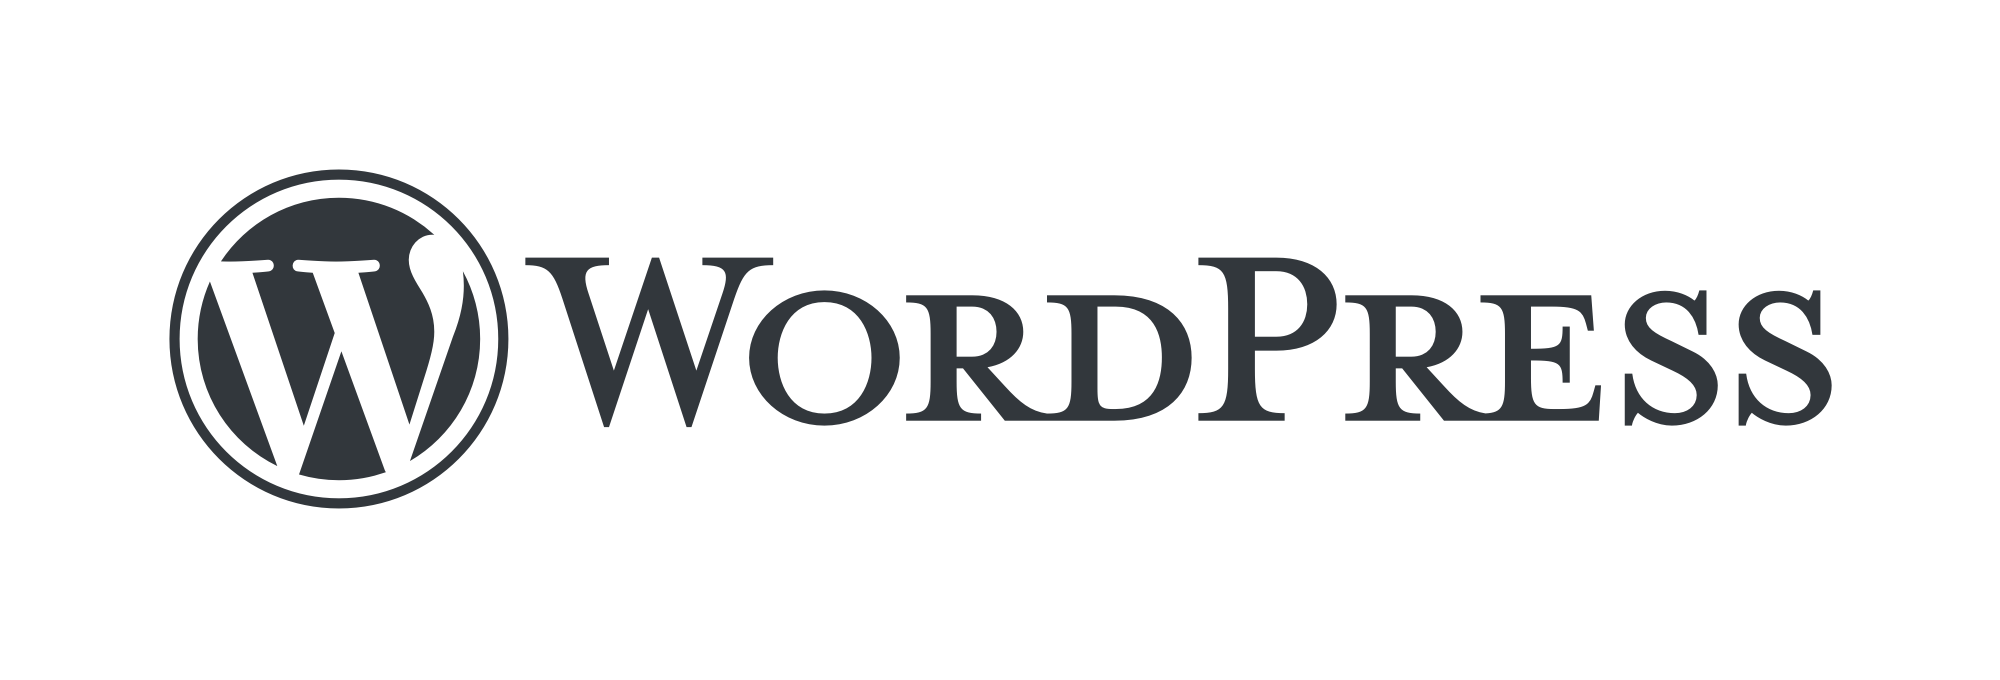 WordPress-logotype-standard (1)